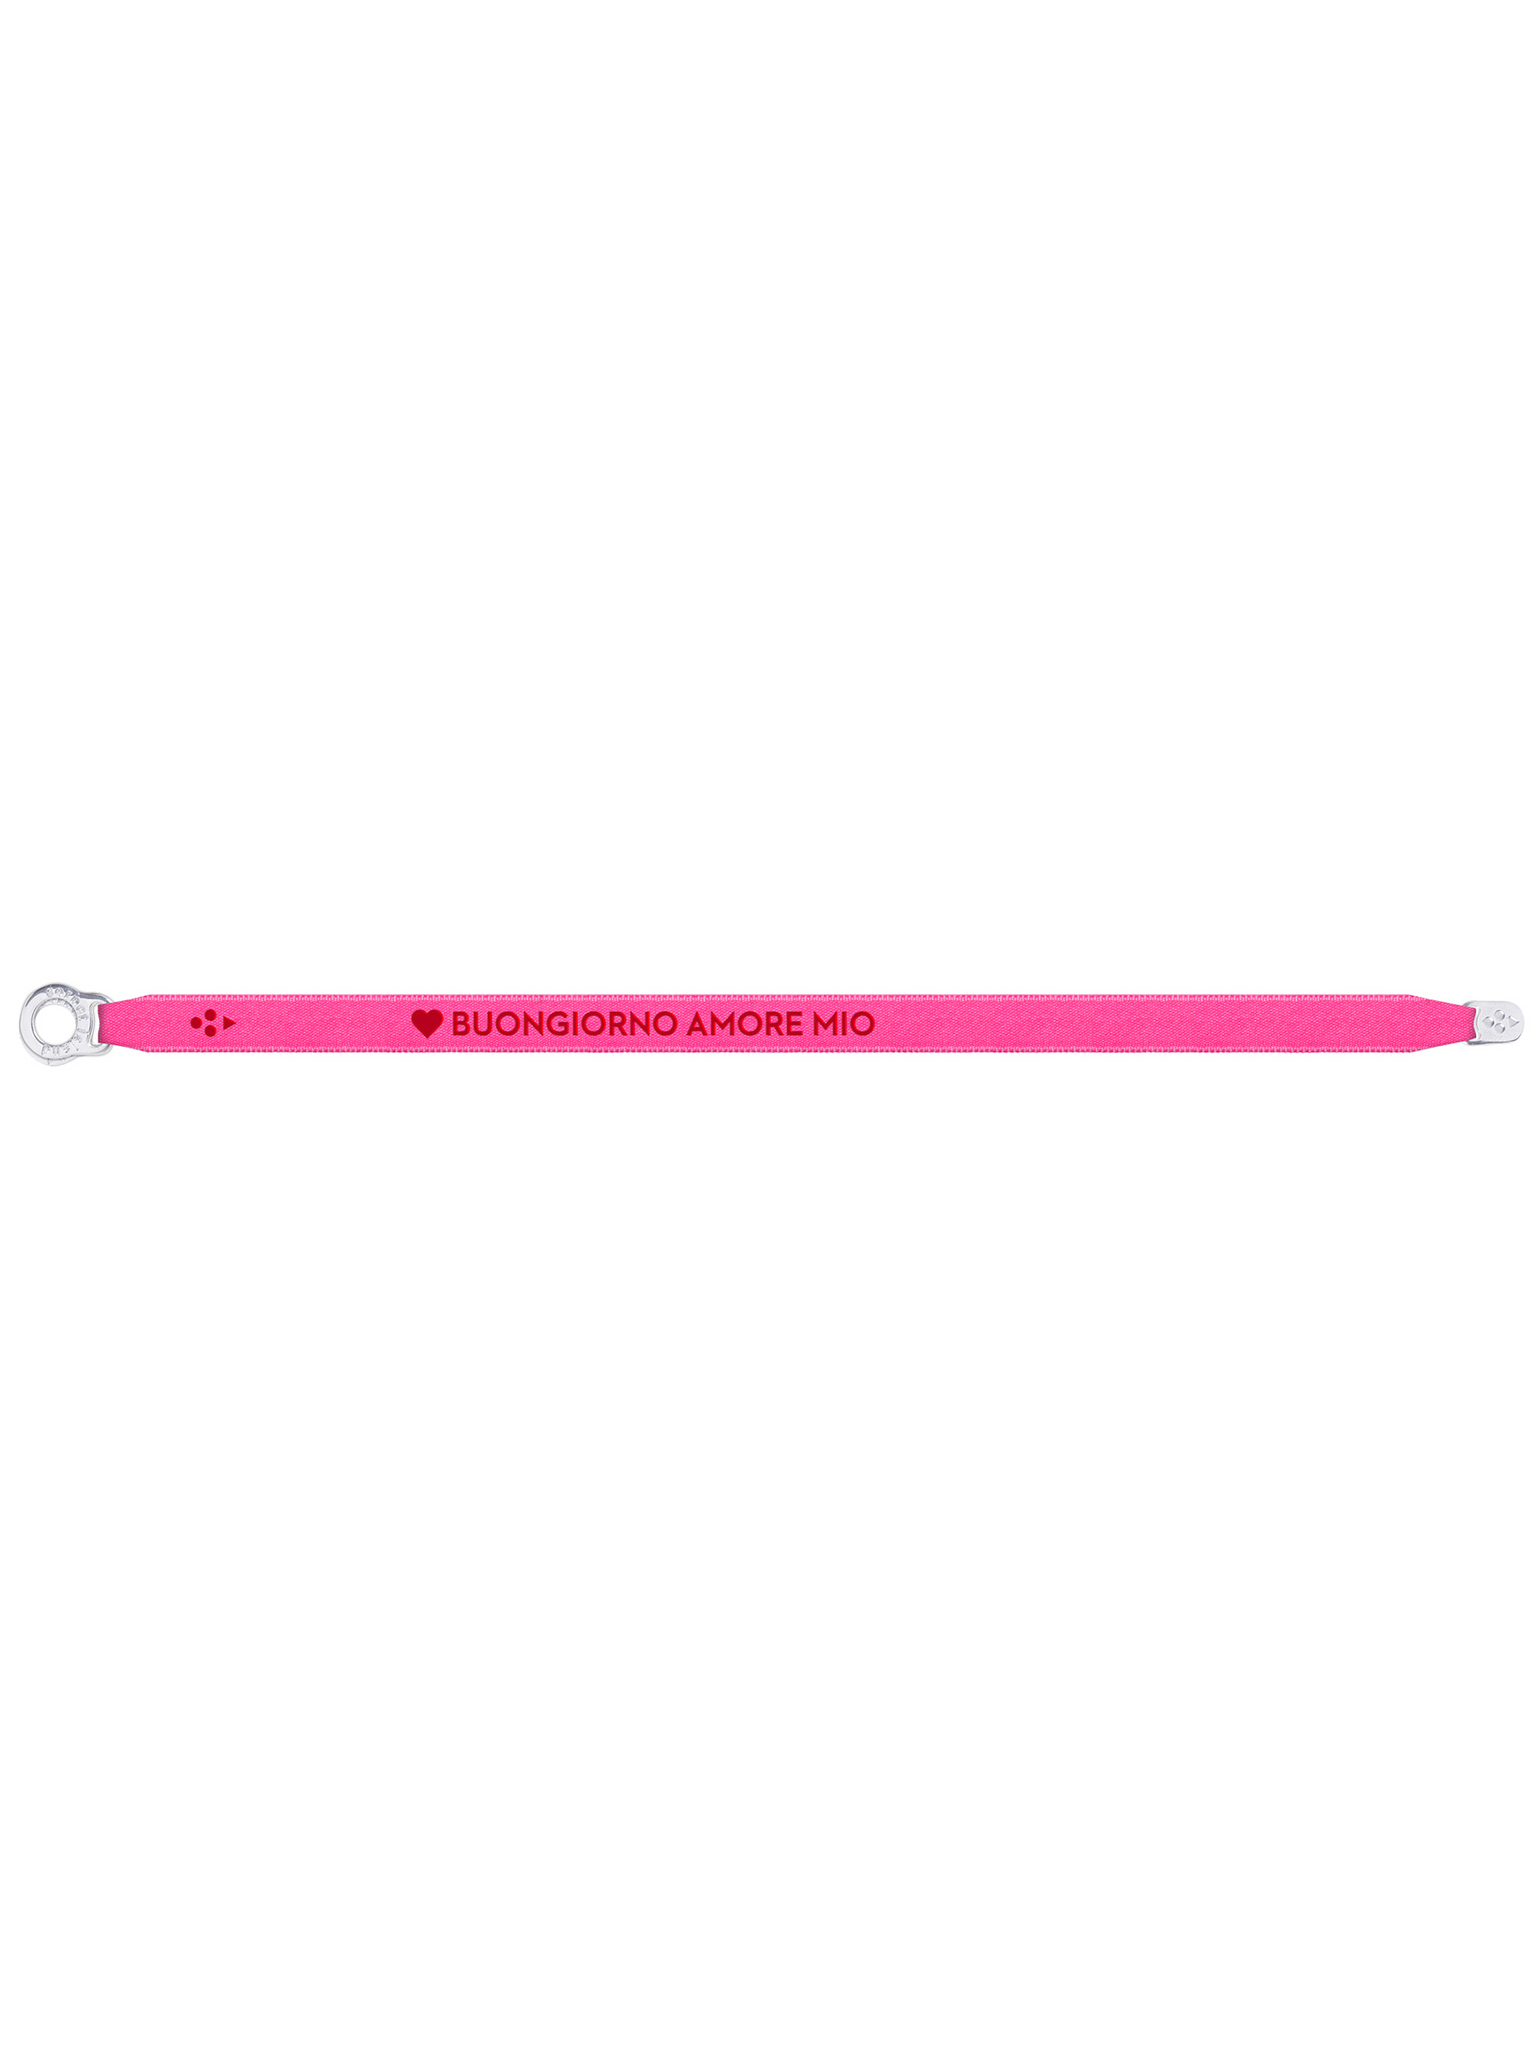 Satin Bracelet "BUONGIORNO AMORE MIO" Neon Pink